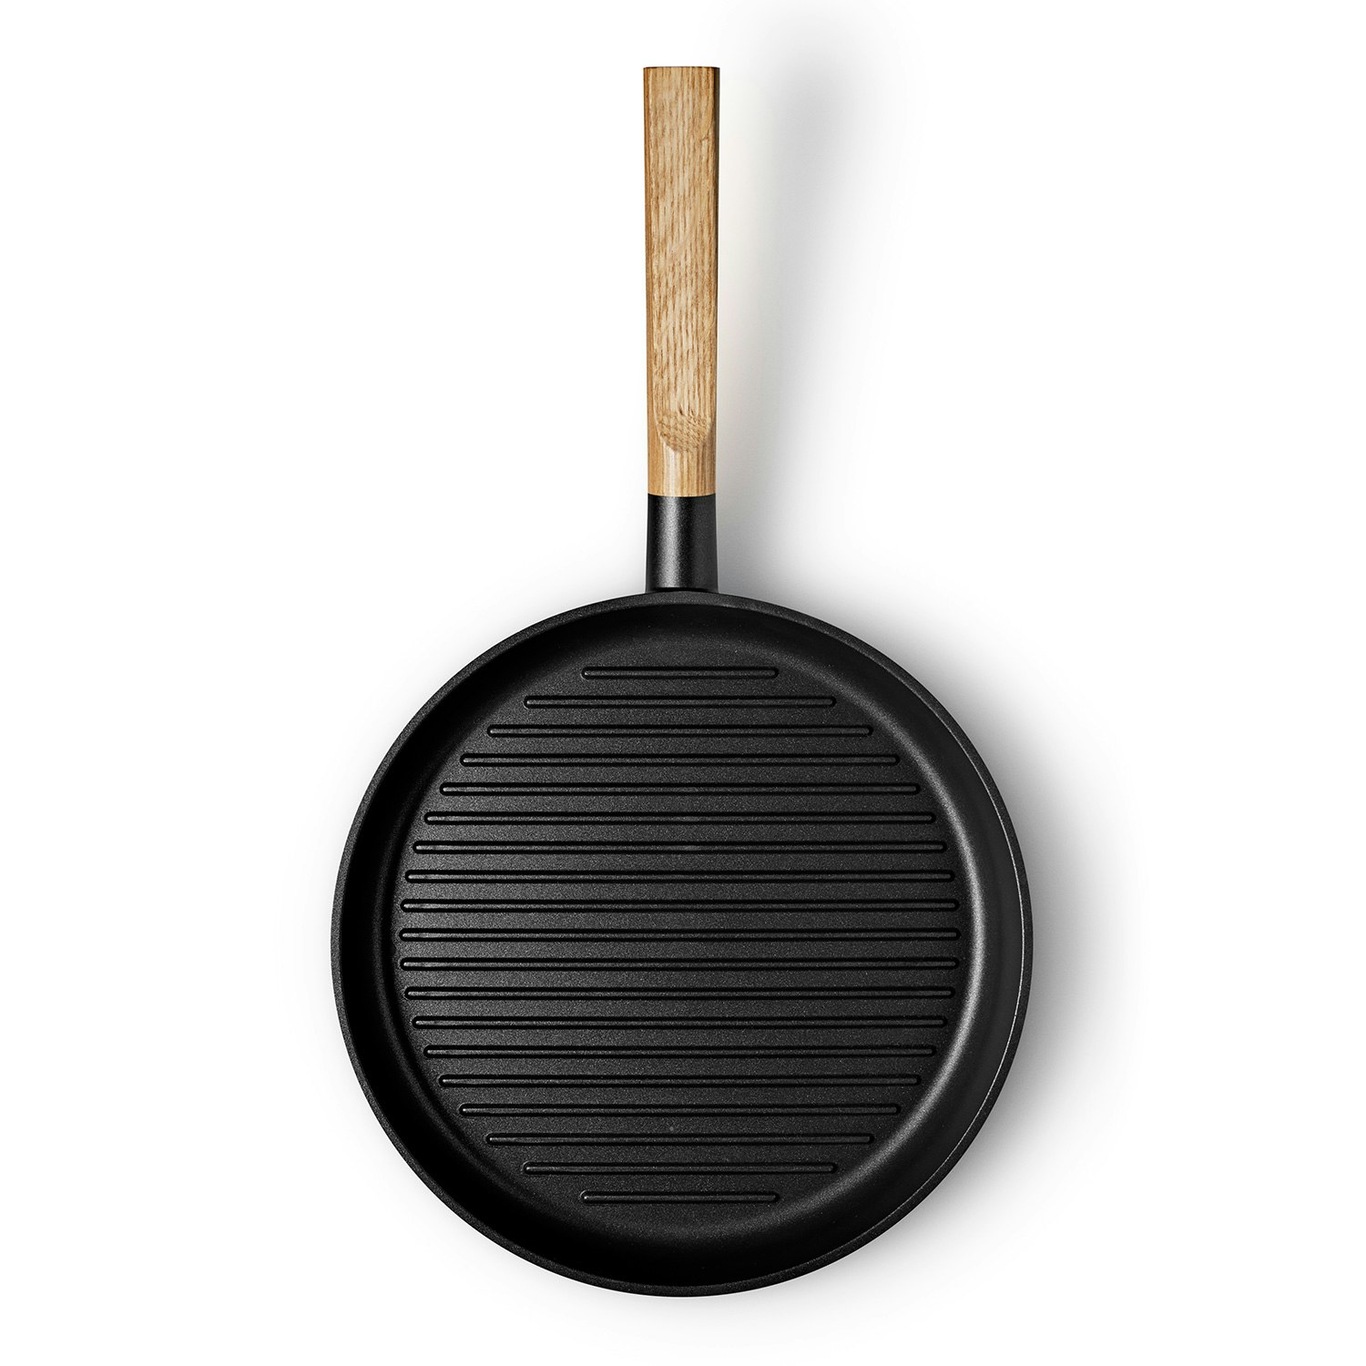 https://royaldesign.com/image/2/eva-solo-nordic-kitchen-grill-frying-pan-1?w=800&quality=80